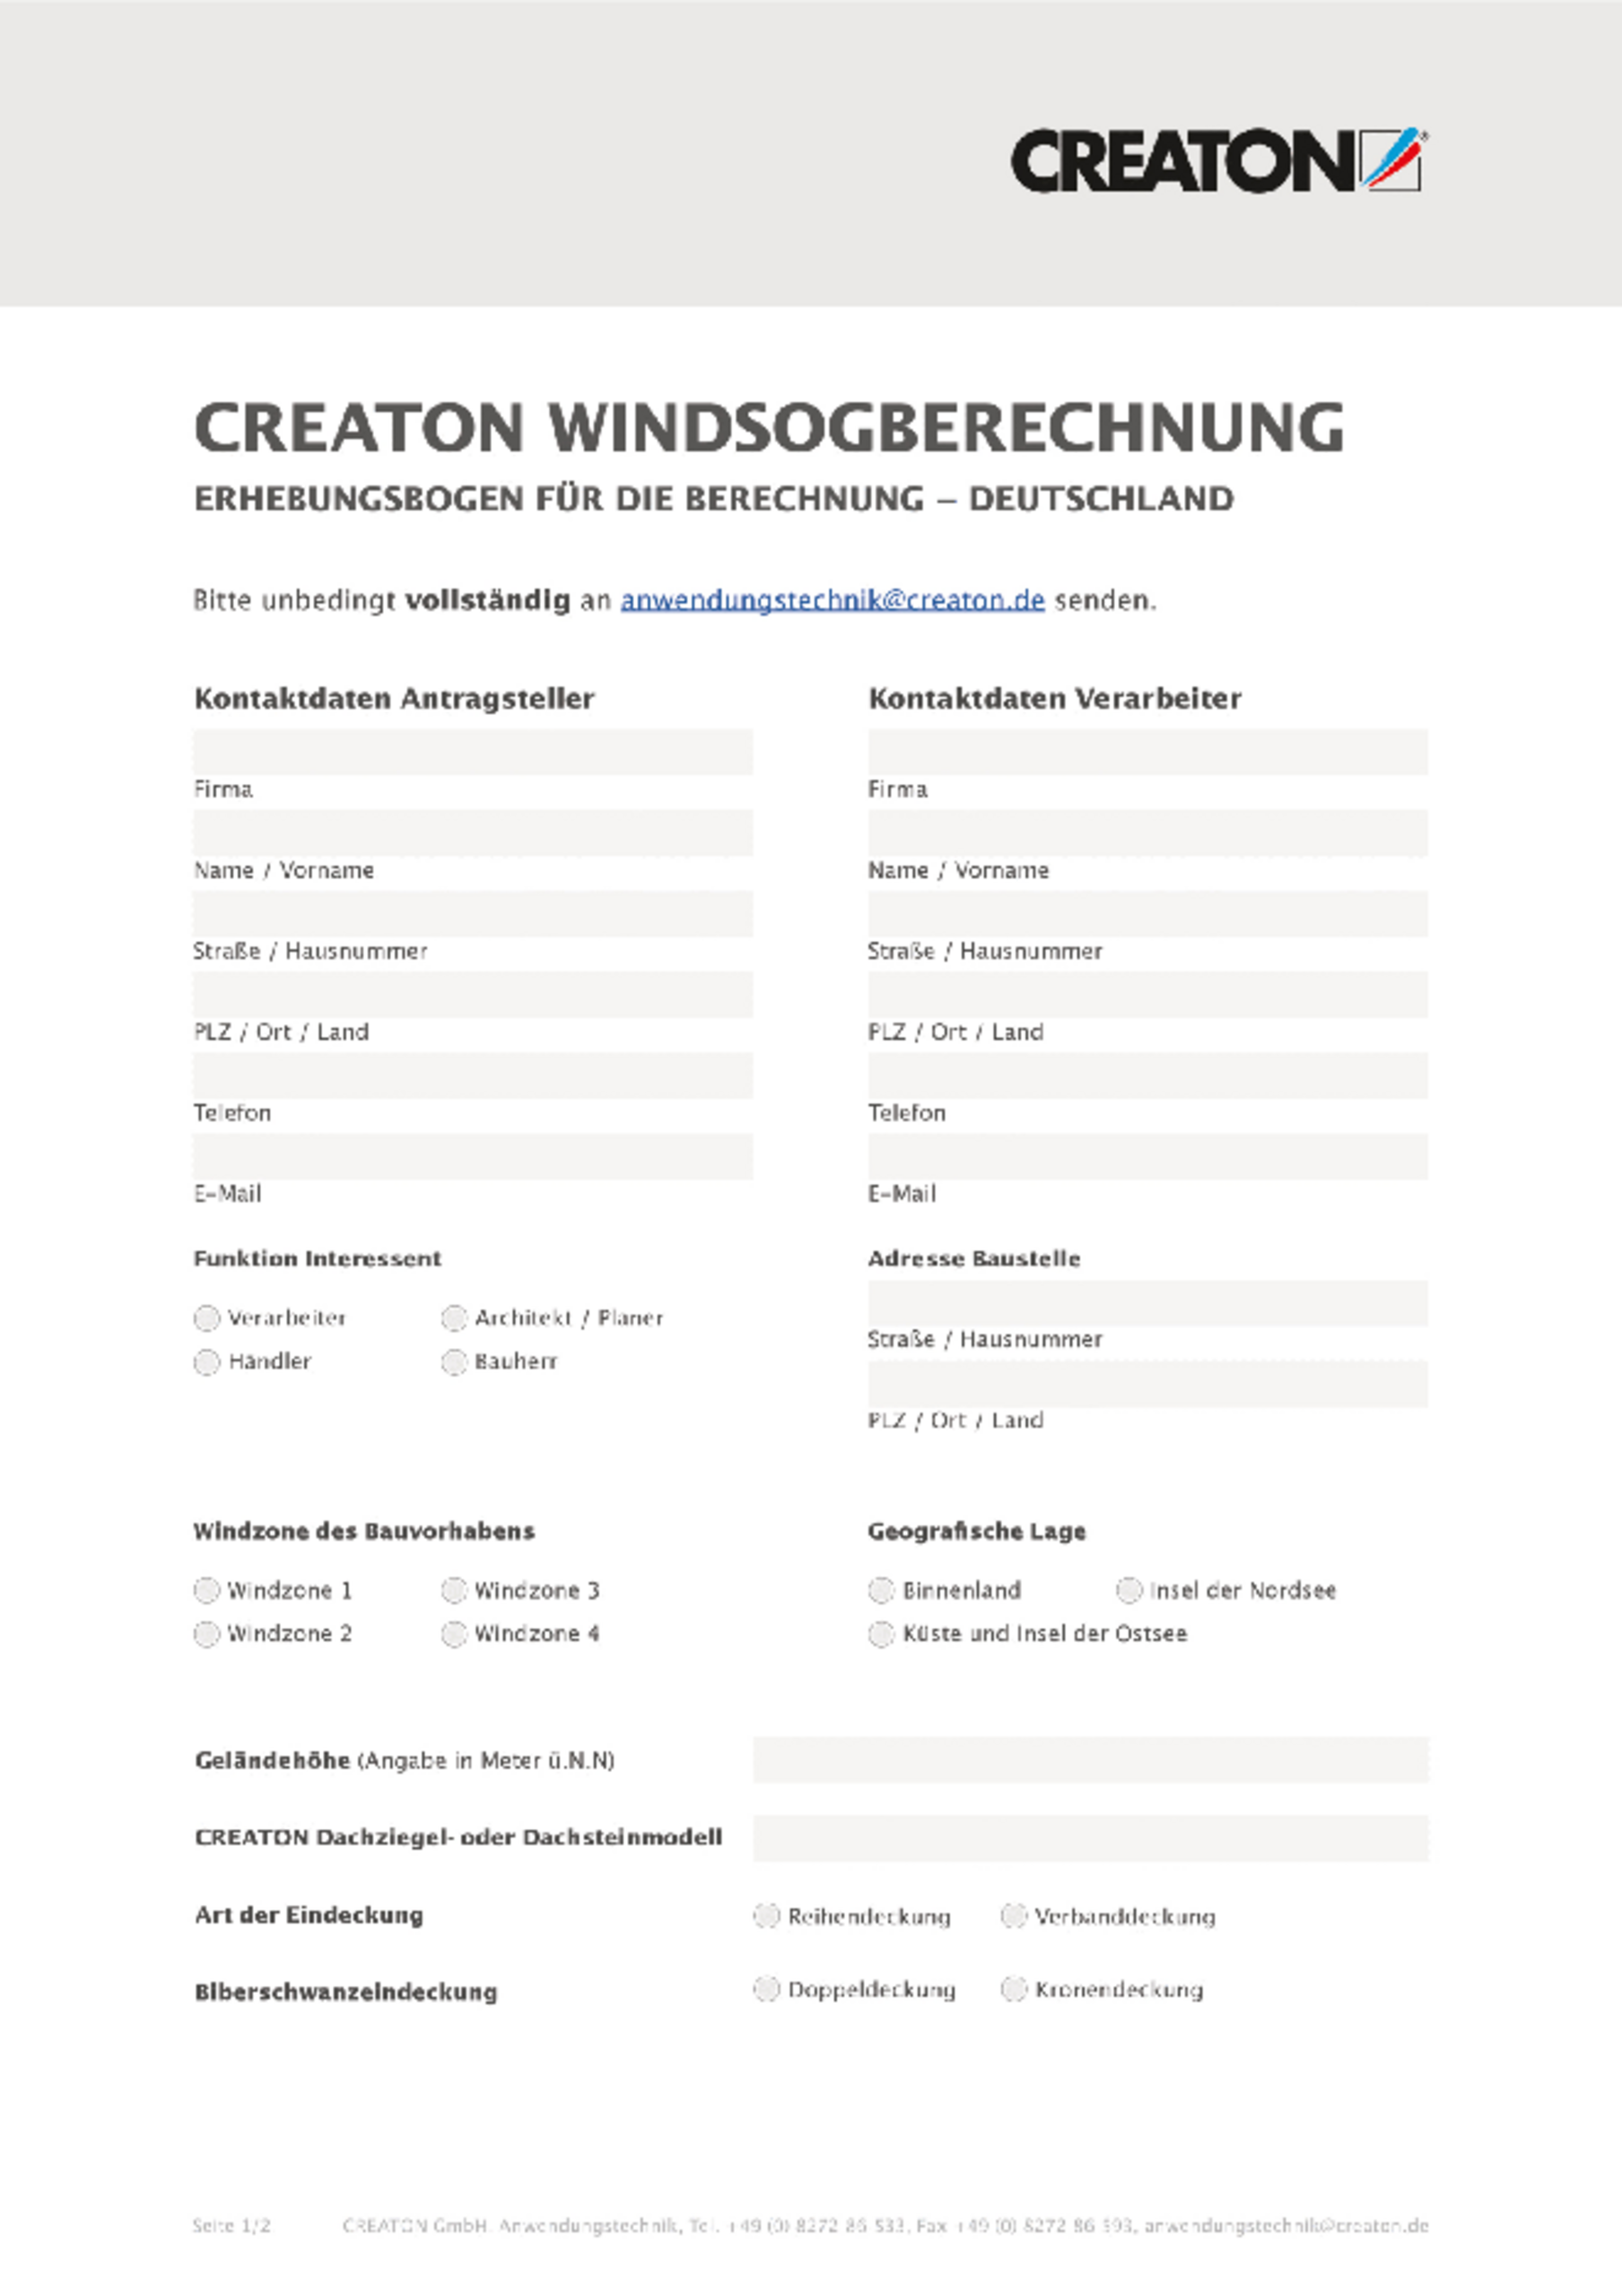 PRO_BEST_Erhebungsbogen-Windsogberechnung-DE_#SALL_#ADL_#V1.pdf